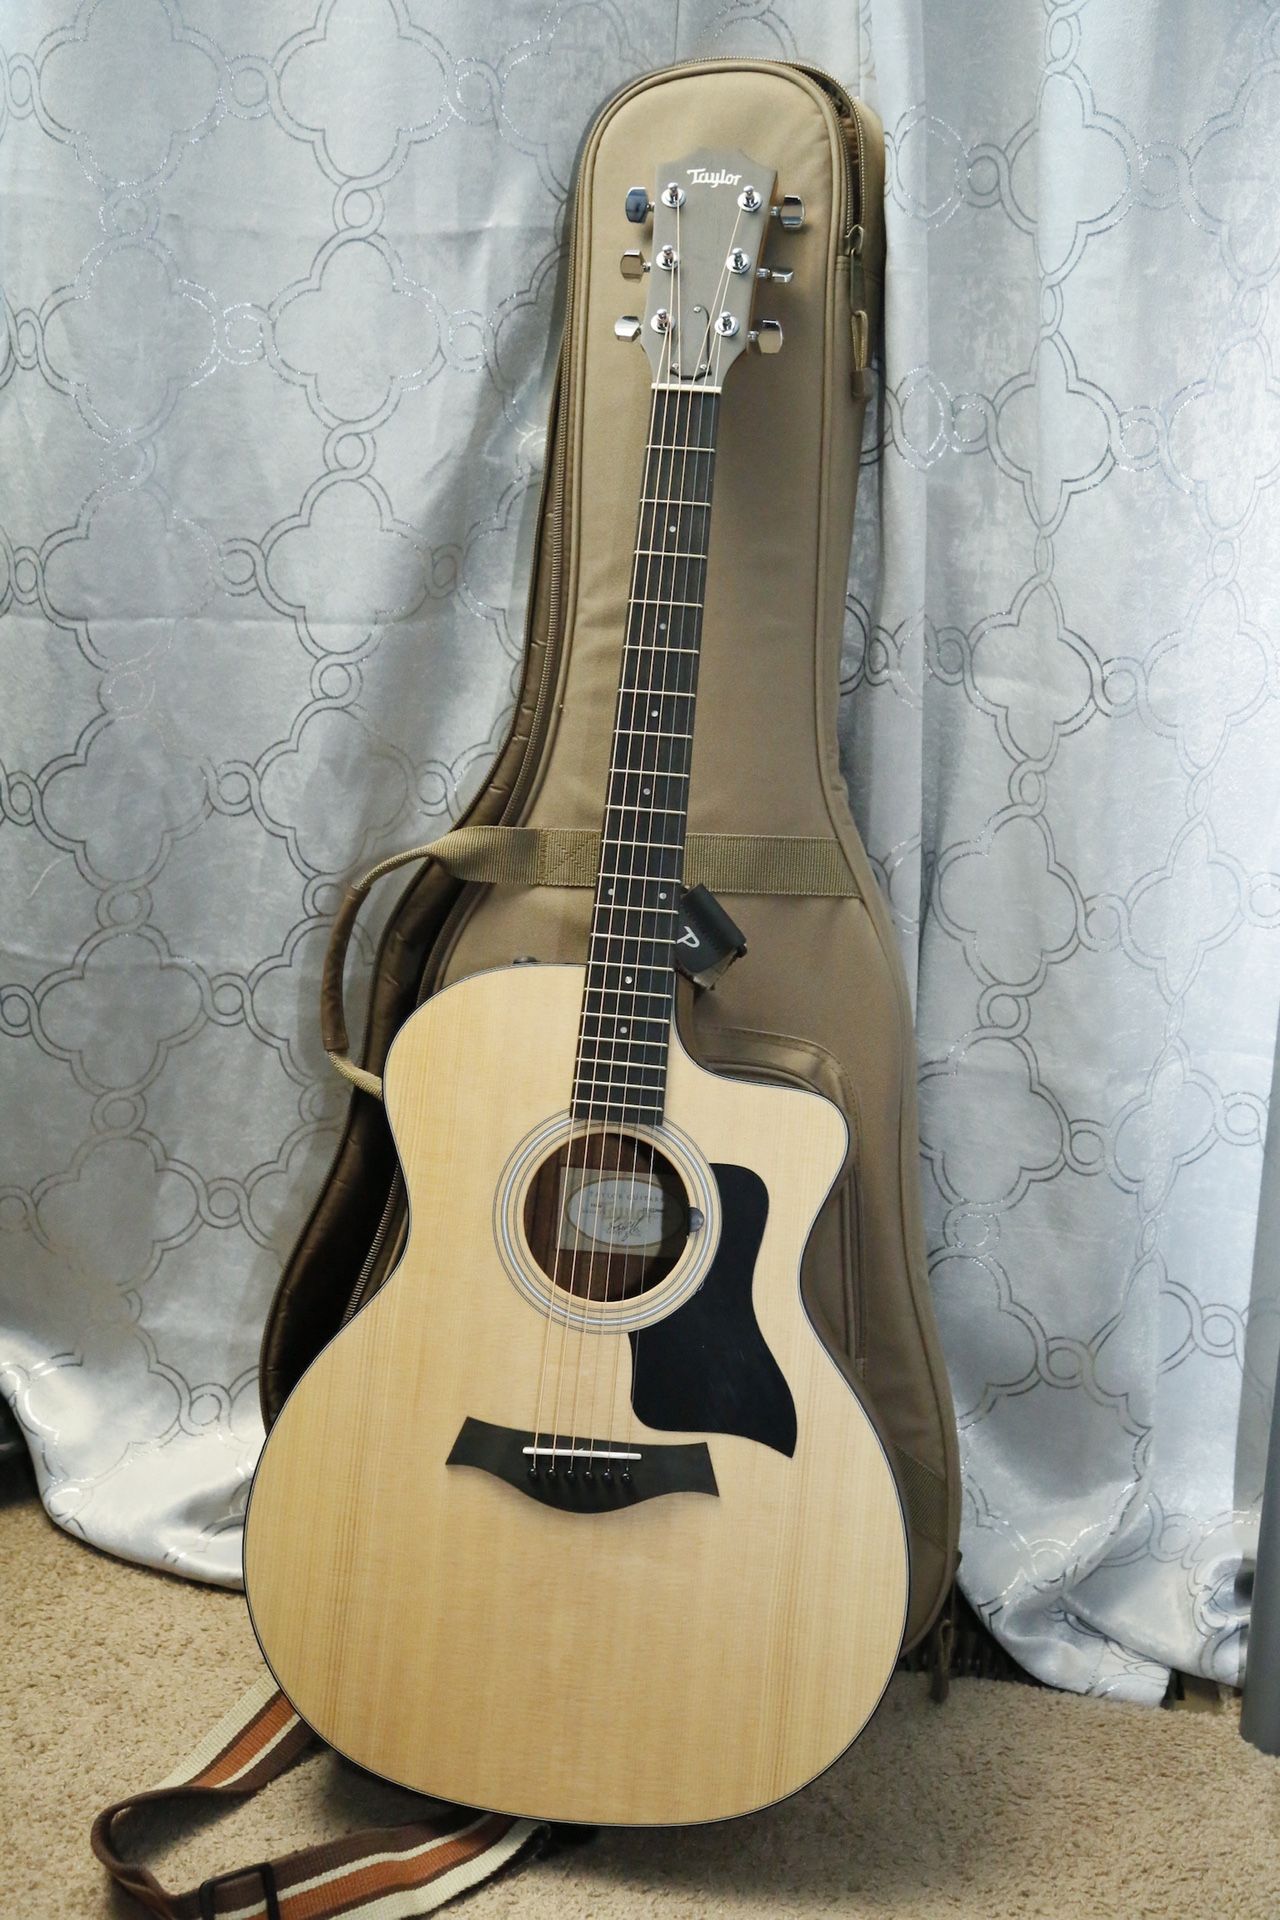 Taylor Electric Acoustic Guitar